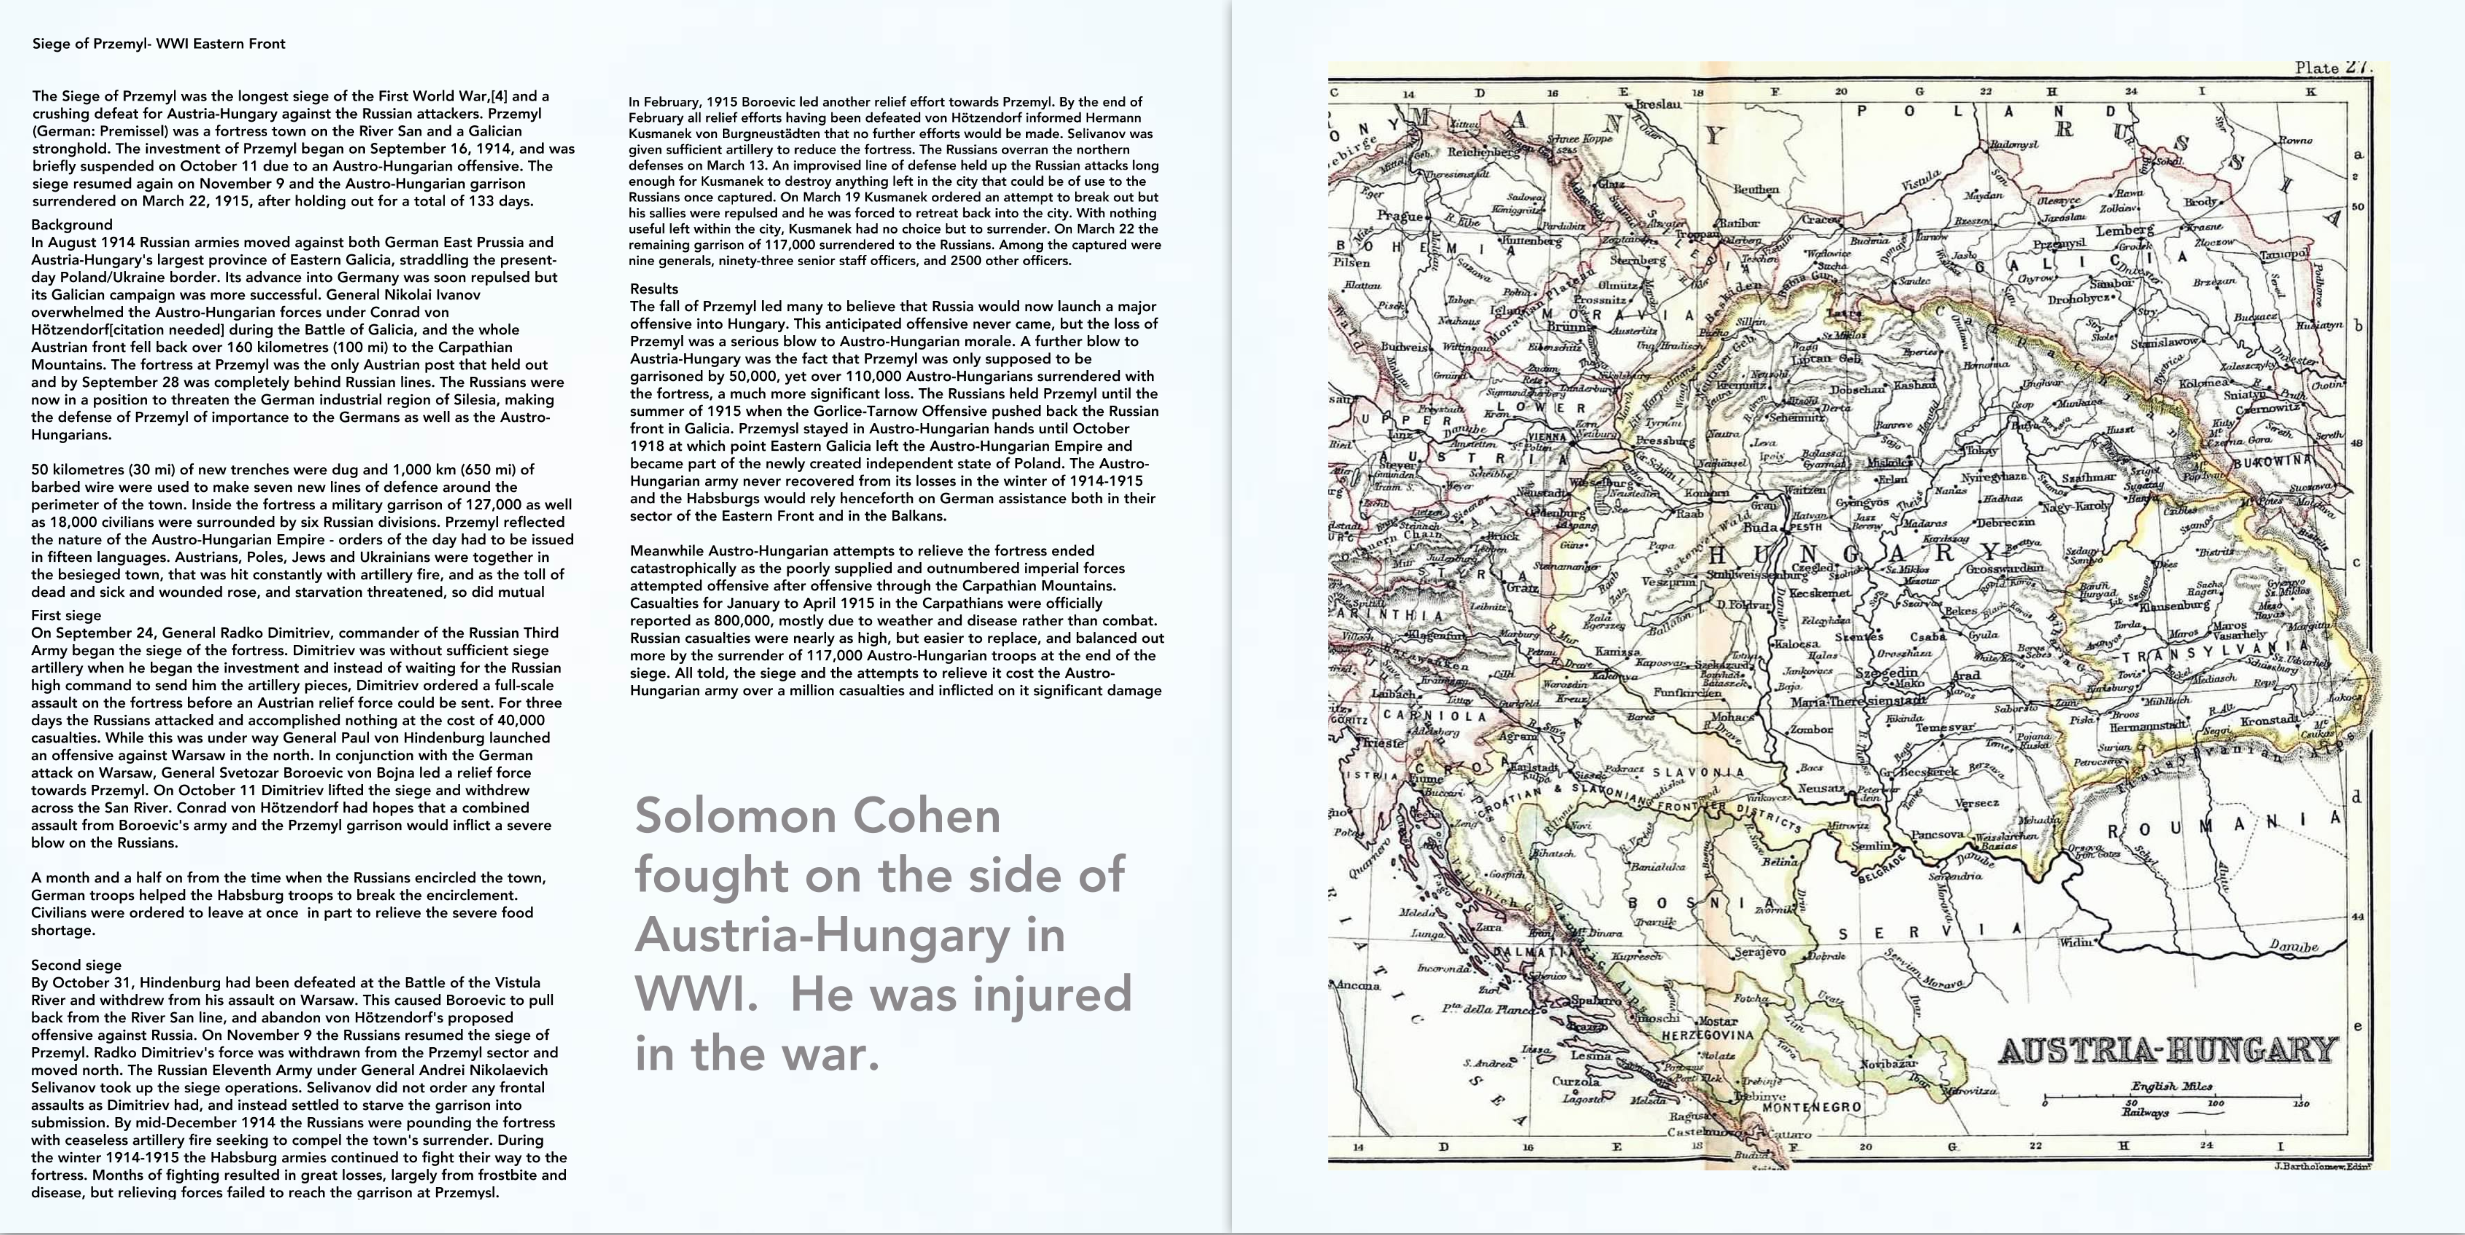 Austria-Hungary map and history of WWI Siege of Przemysl 